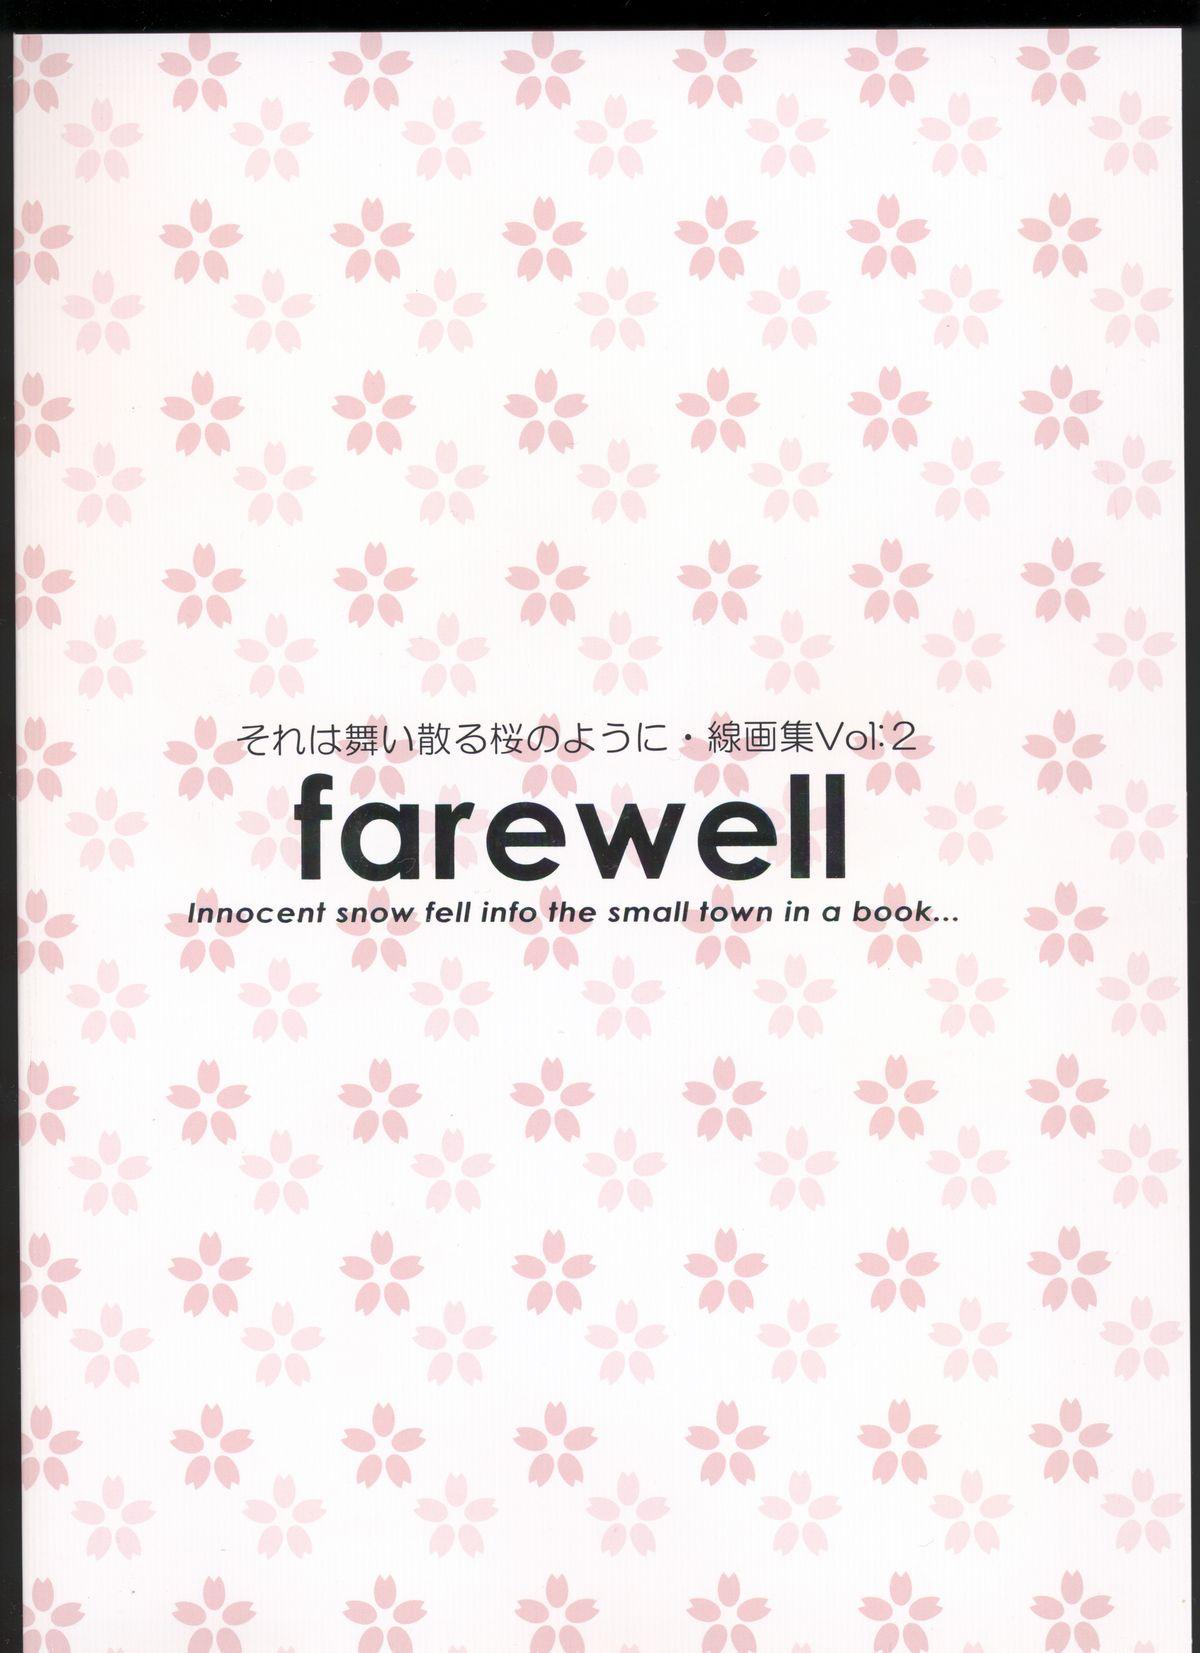 Sore wa Maichiru Sakura no Youni Sengashuu Vol. 2 「farewell -Innocent snow fell into the small town in a book...」 126